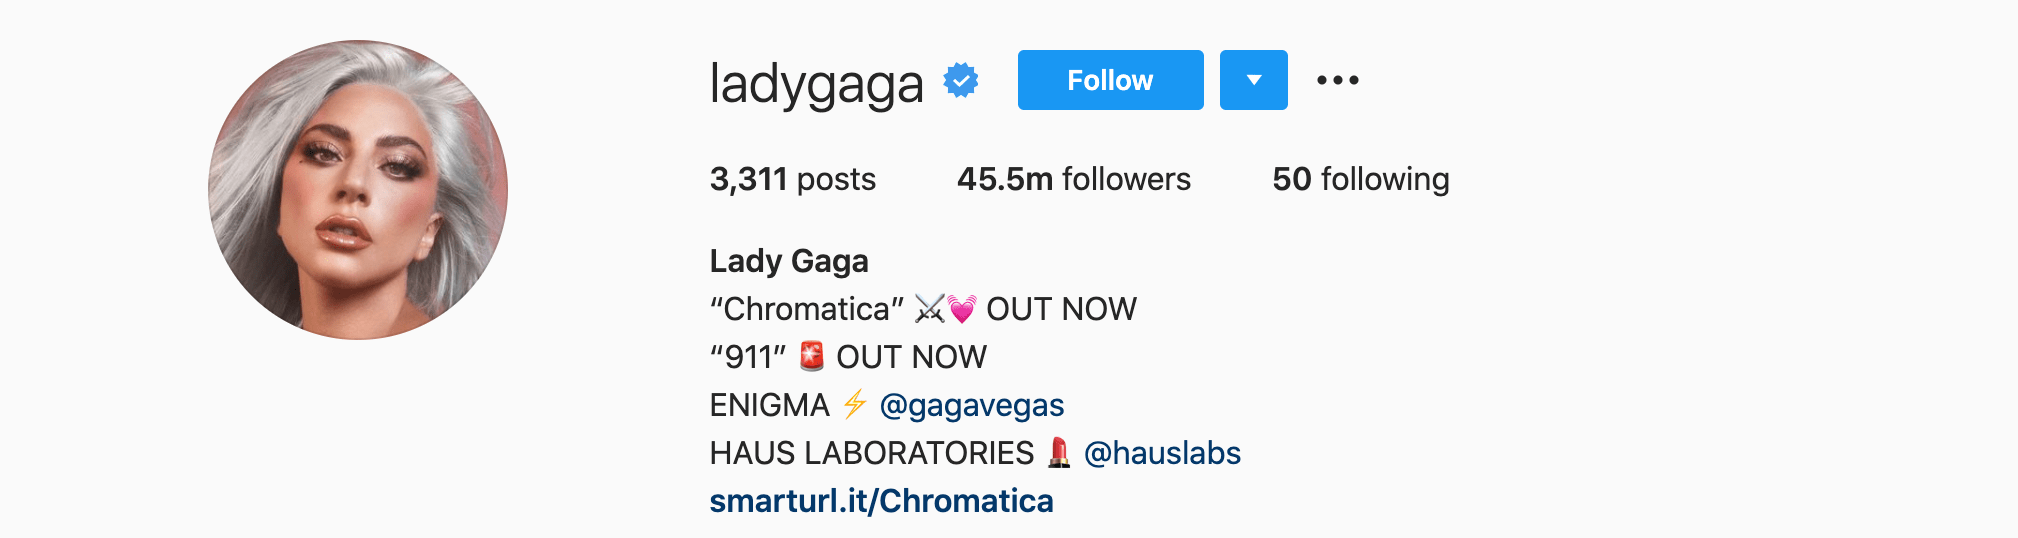 Top Instagram Influencers - LADY GAGA